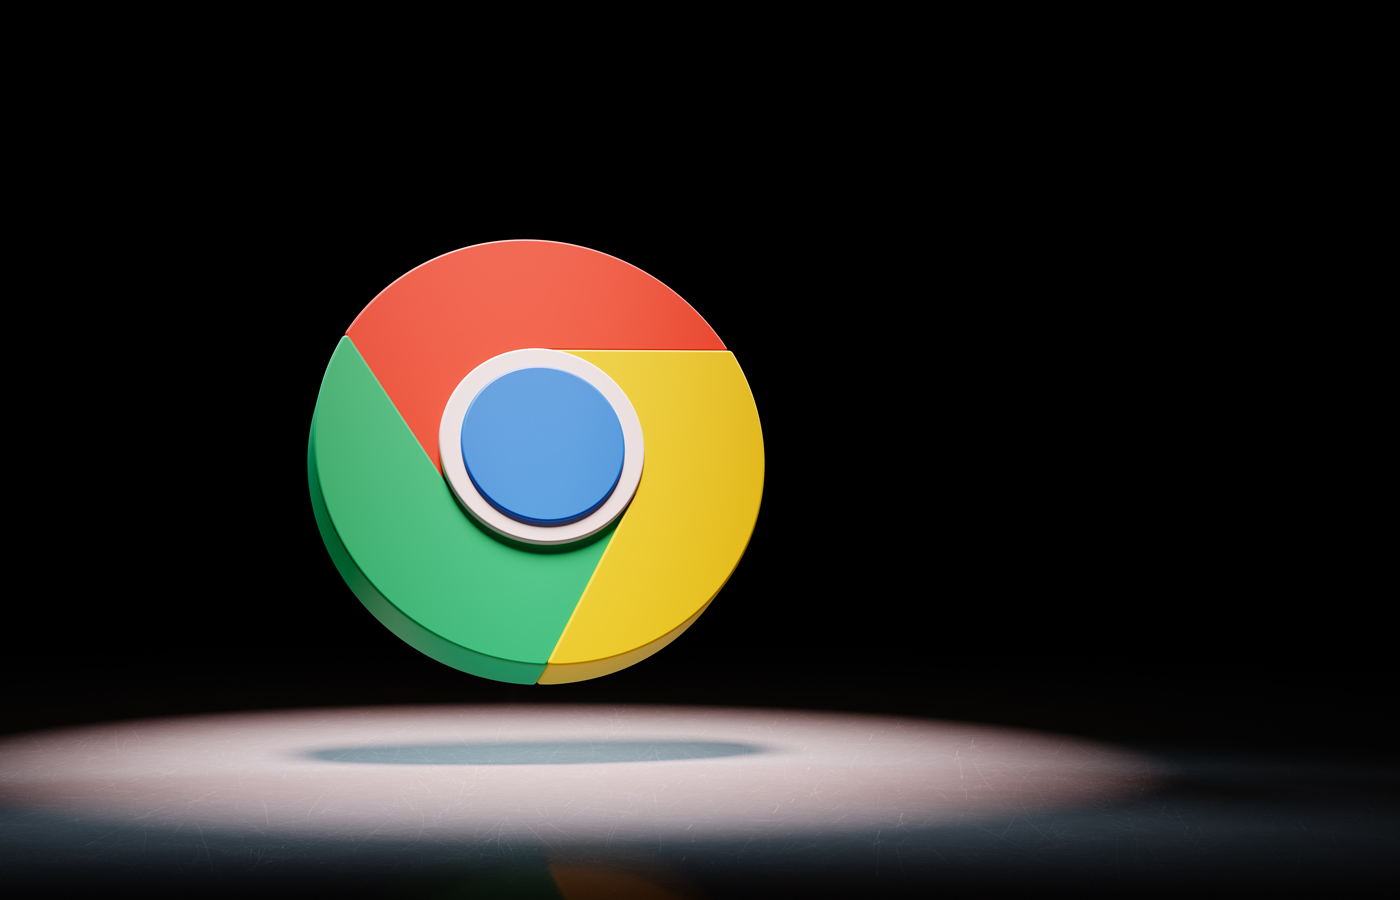 Google Chrome logo spotlighted on black background.